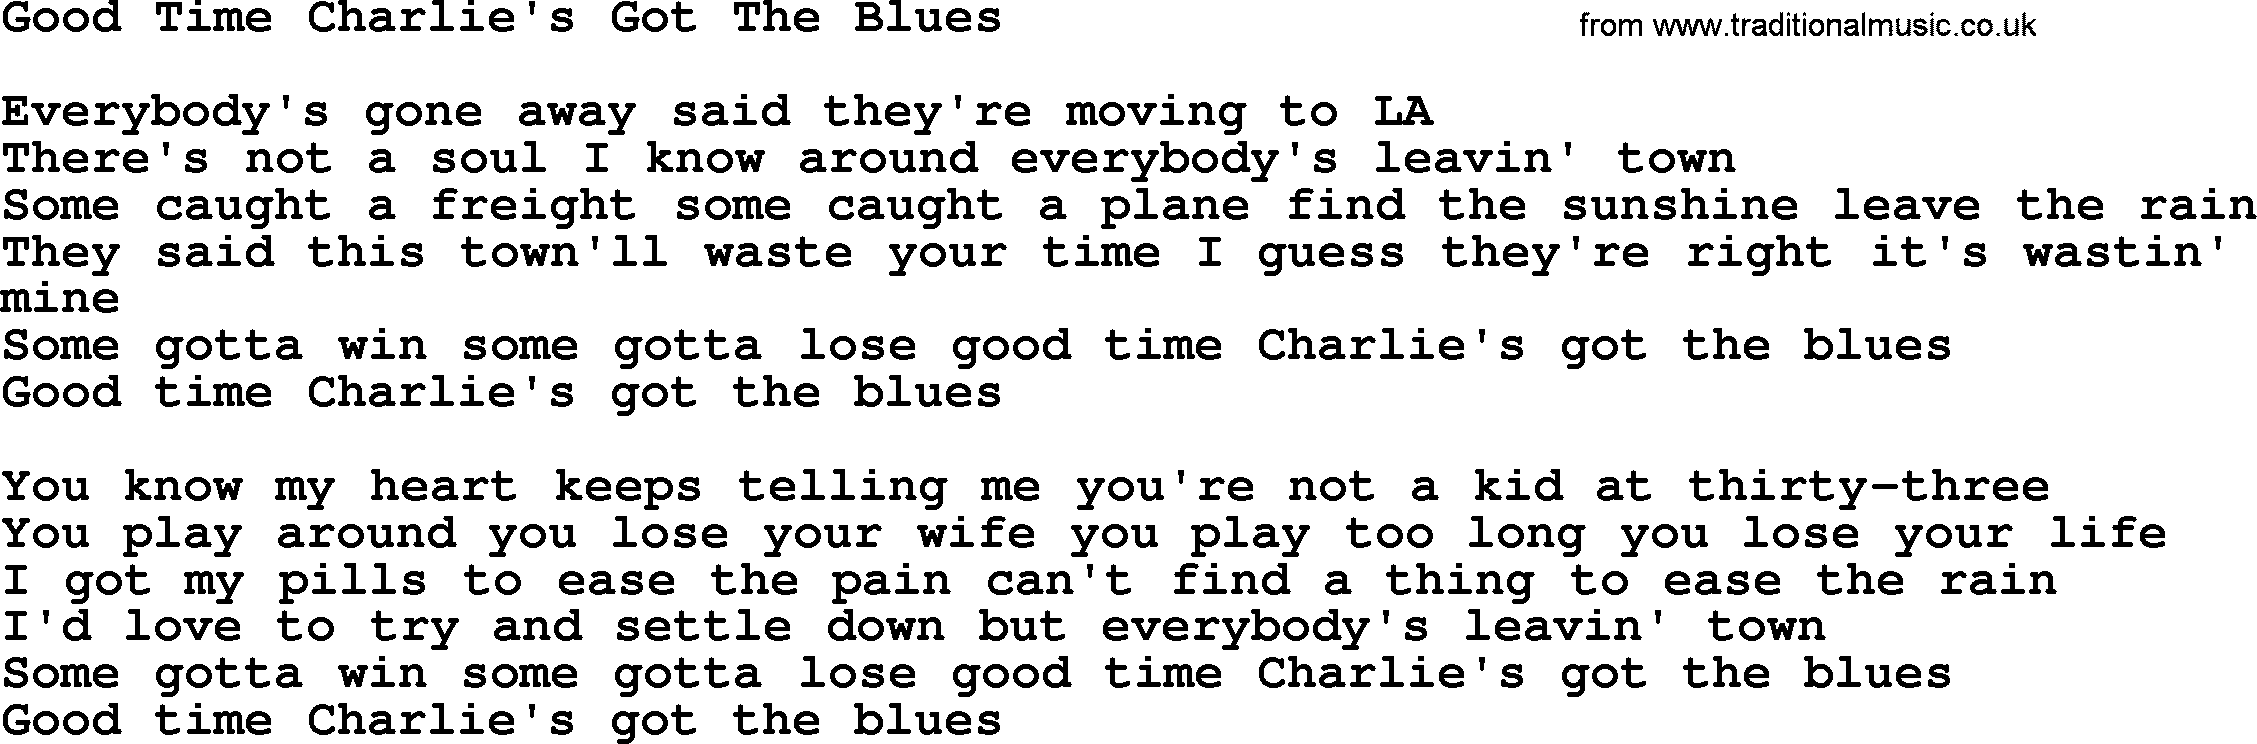 Willie Nelson song: Good Time Charlie's Got The Blues lyrics